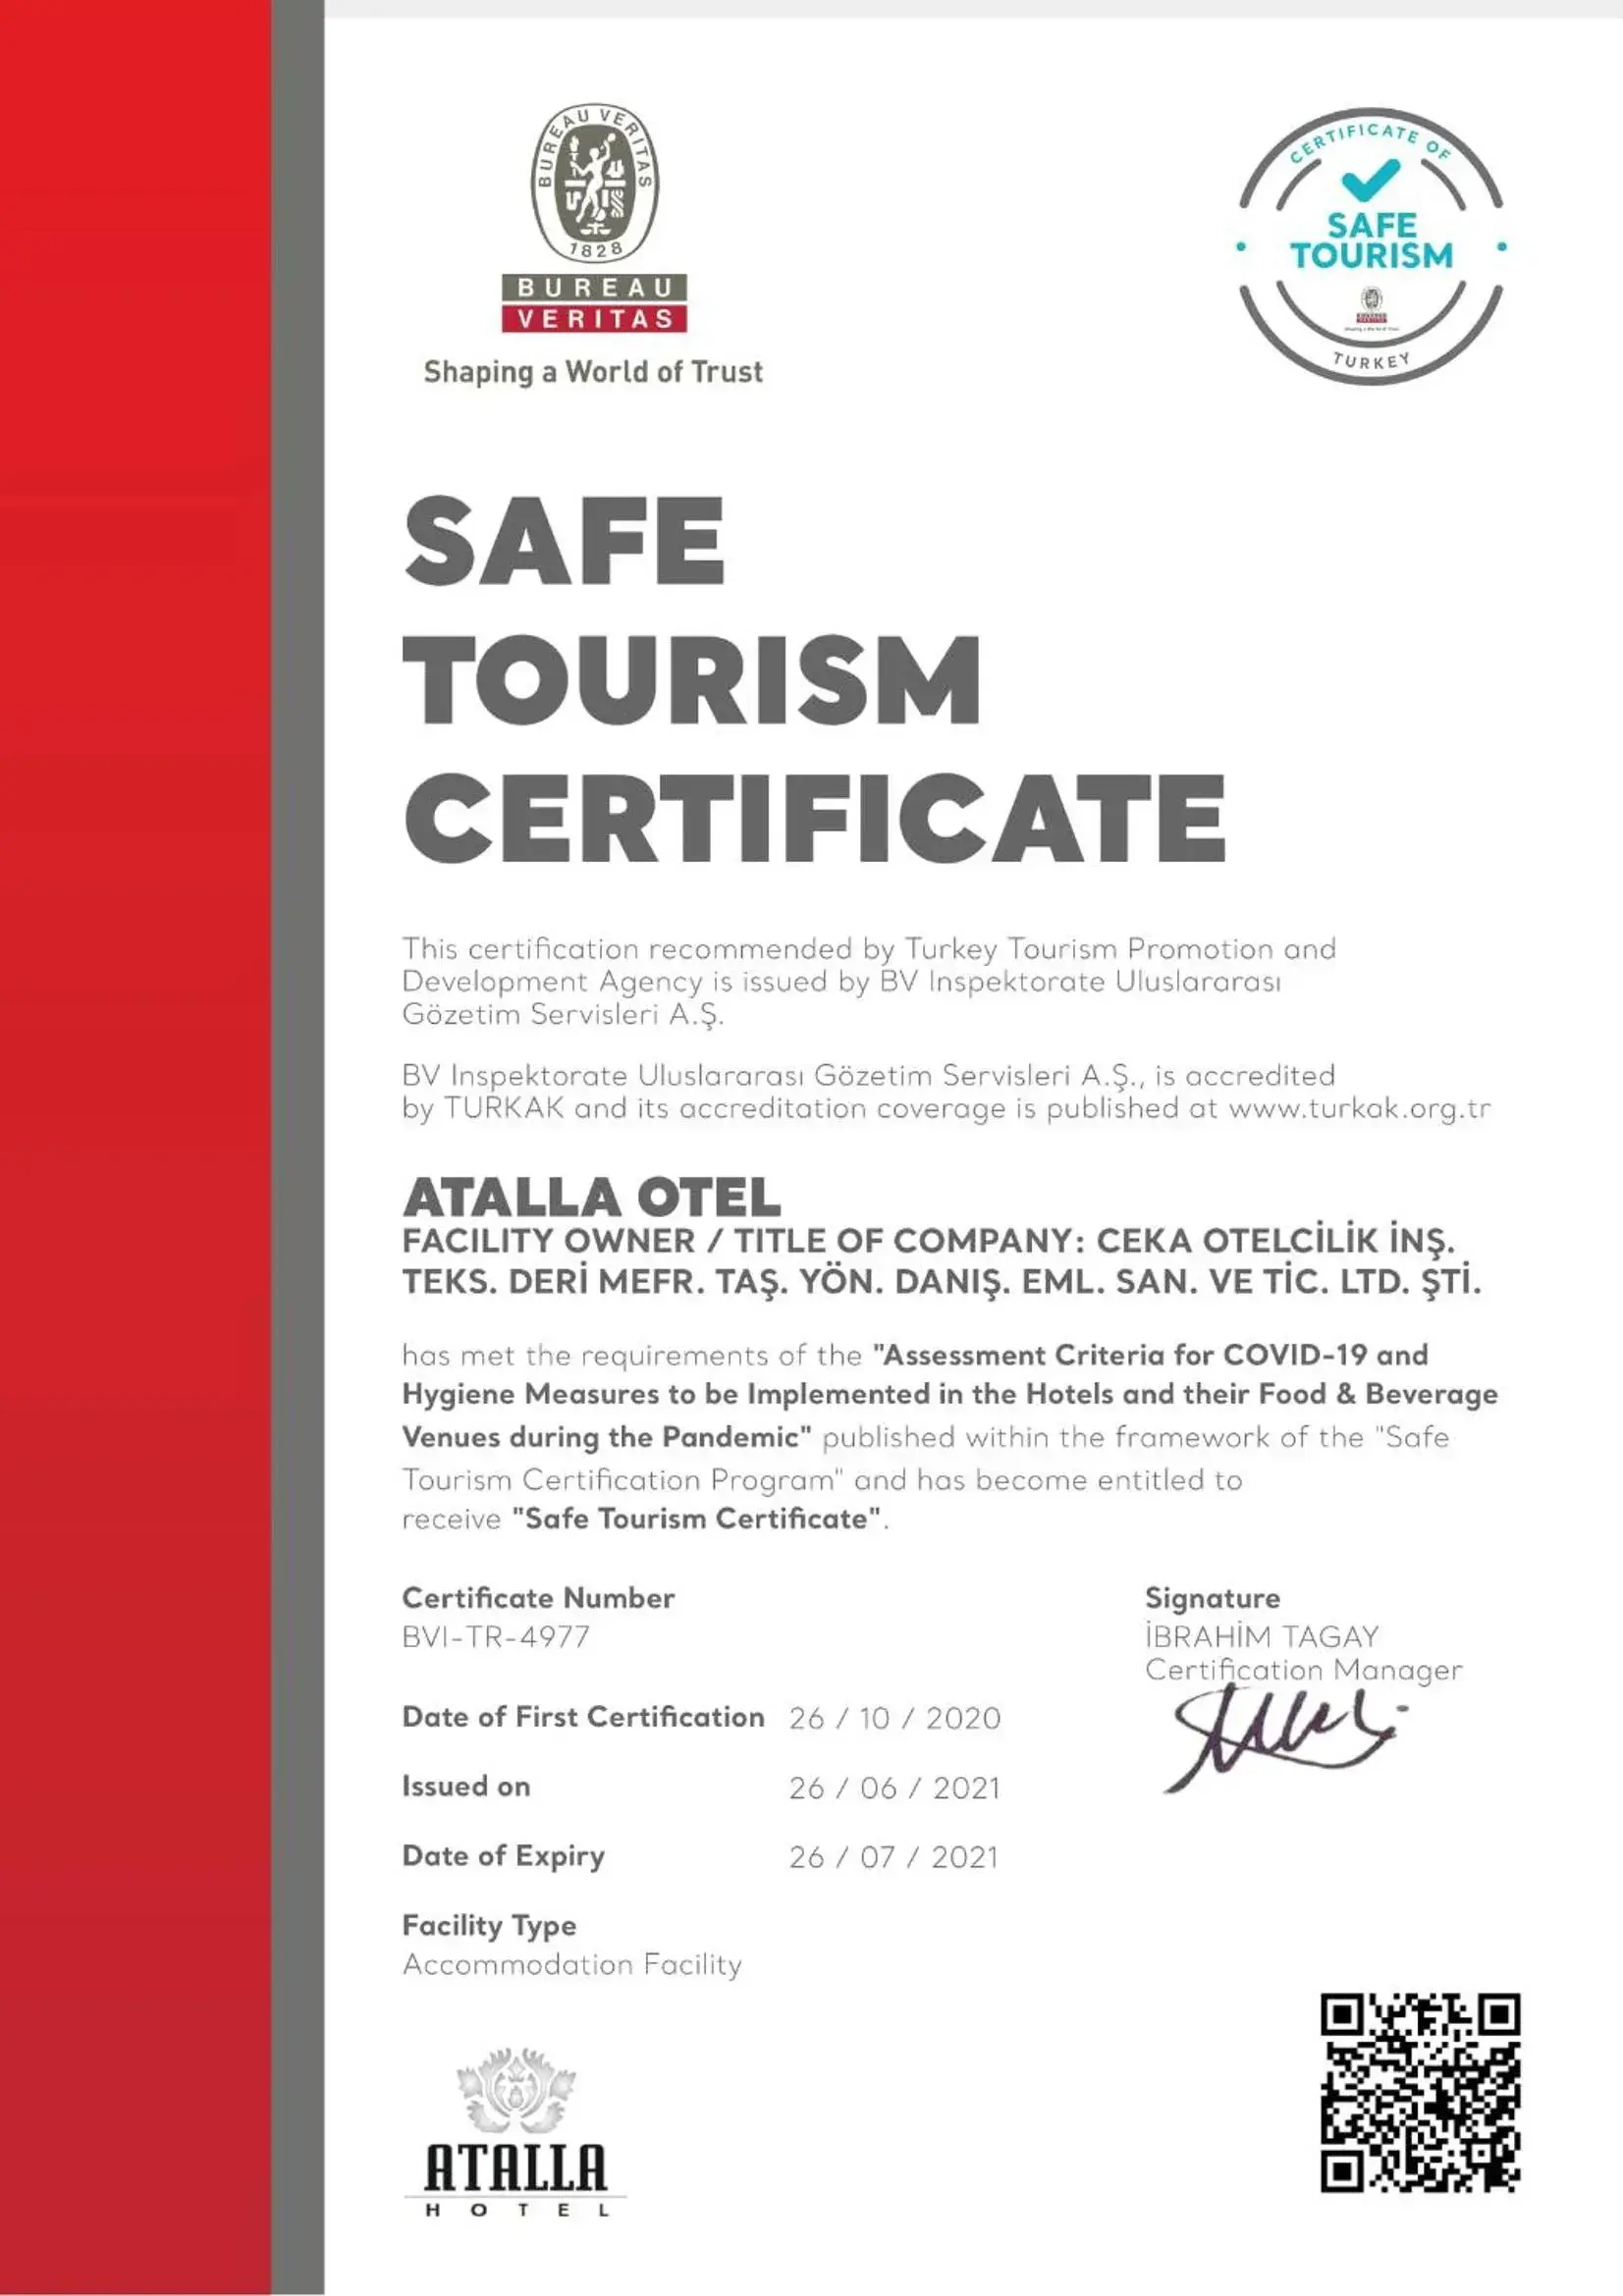 Logo/Certificate/Sign in Atalla Hotel